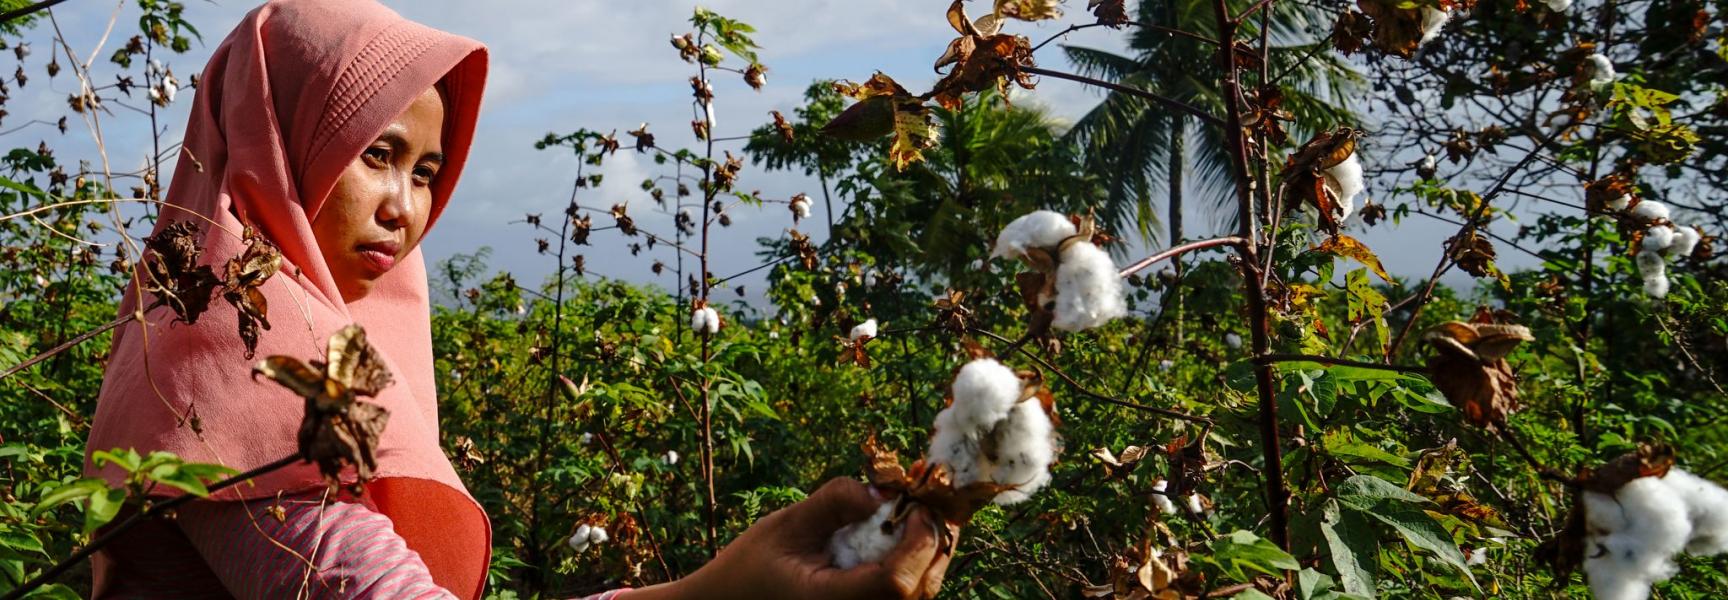 Woman picking cotton